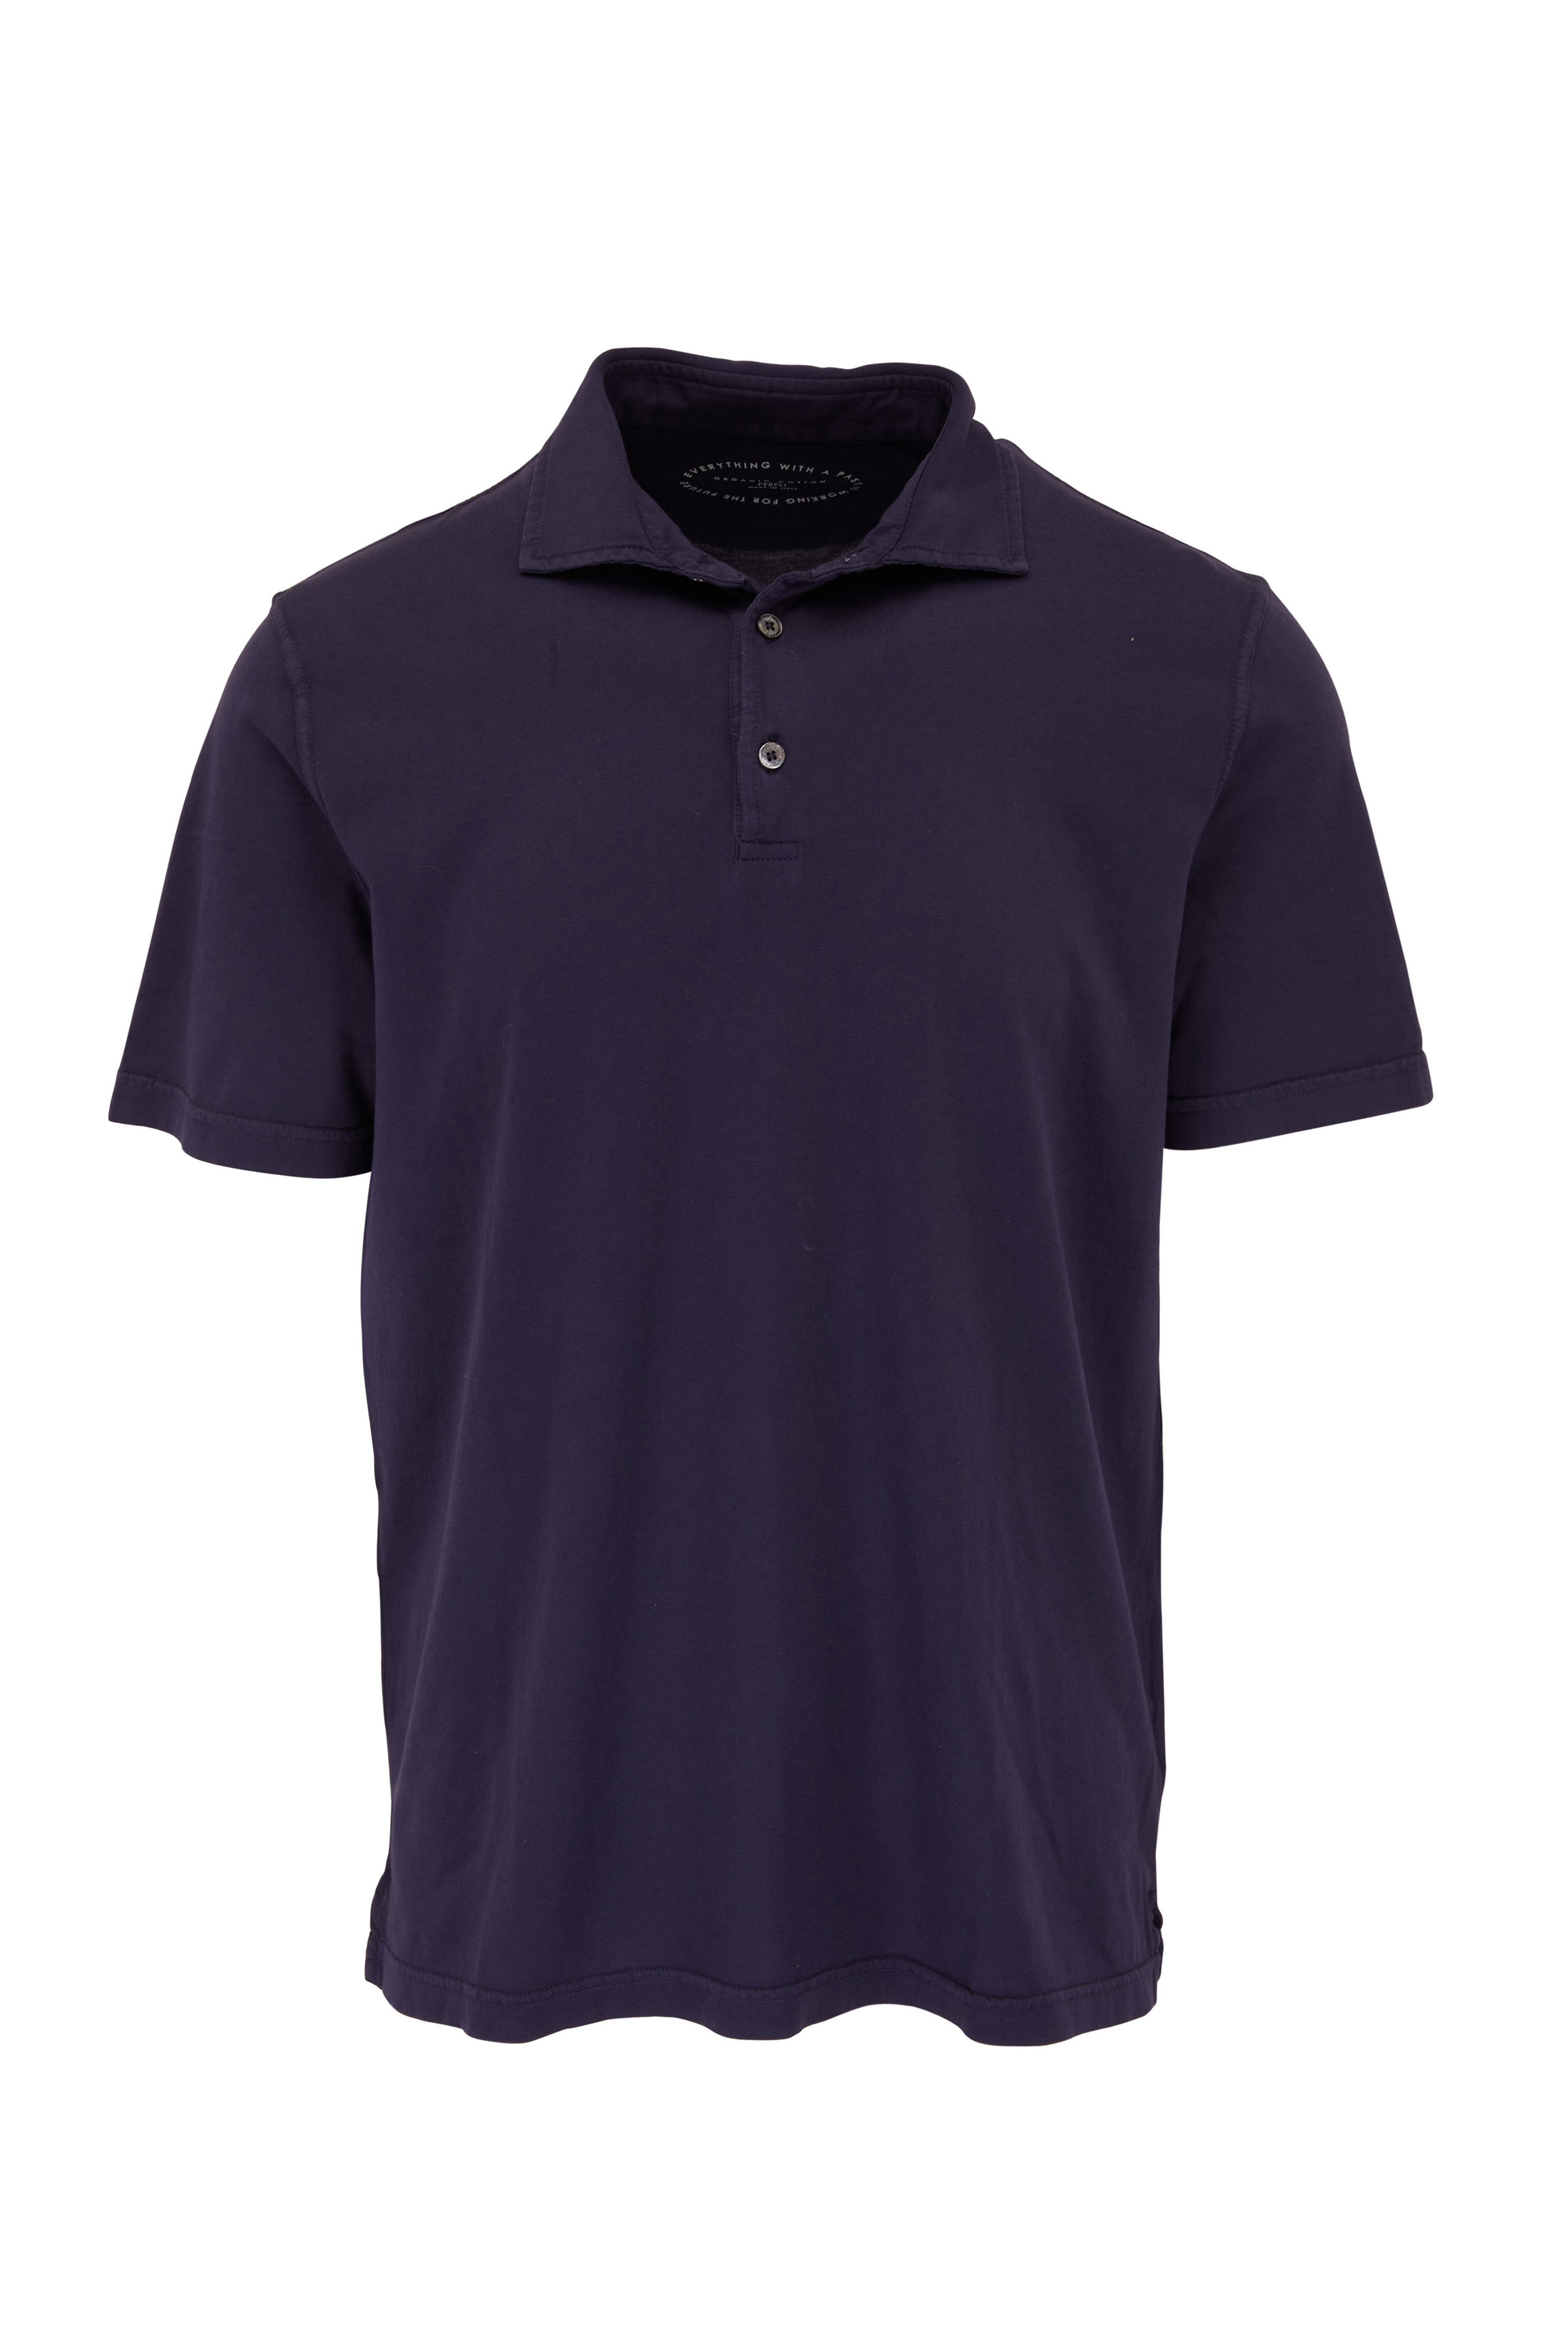 Fedeli Classic Short Sleeve Knitted Piqué Polo Shirt Riviera Blue